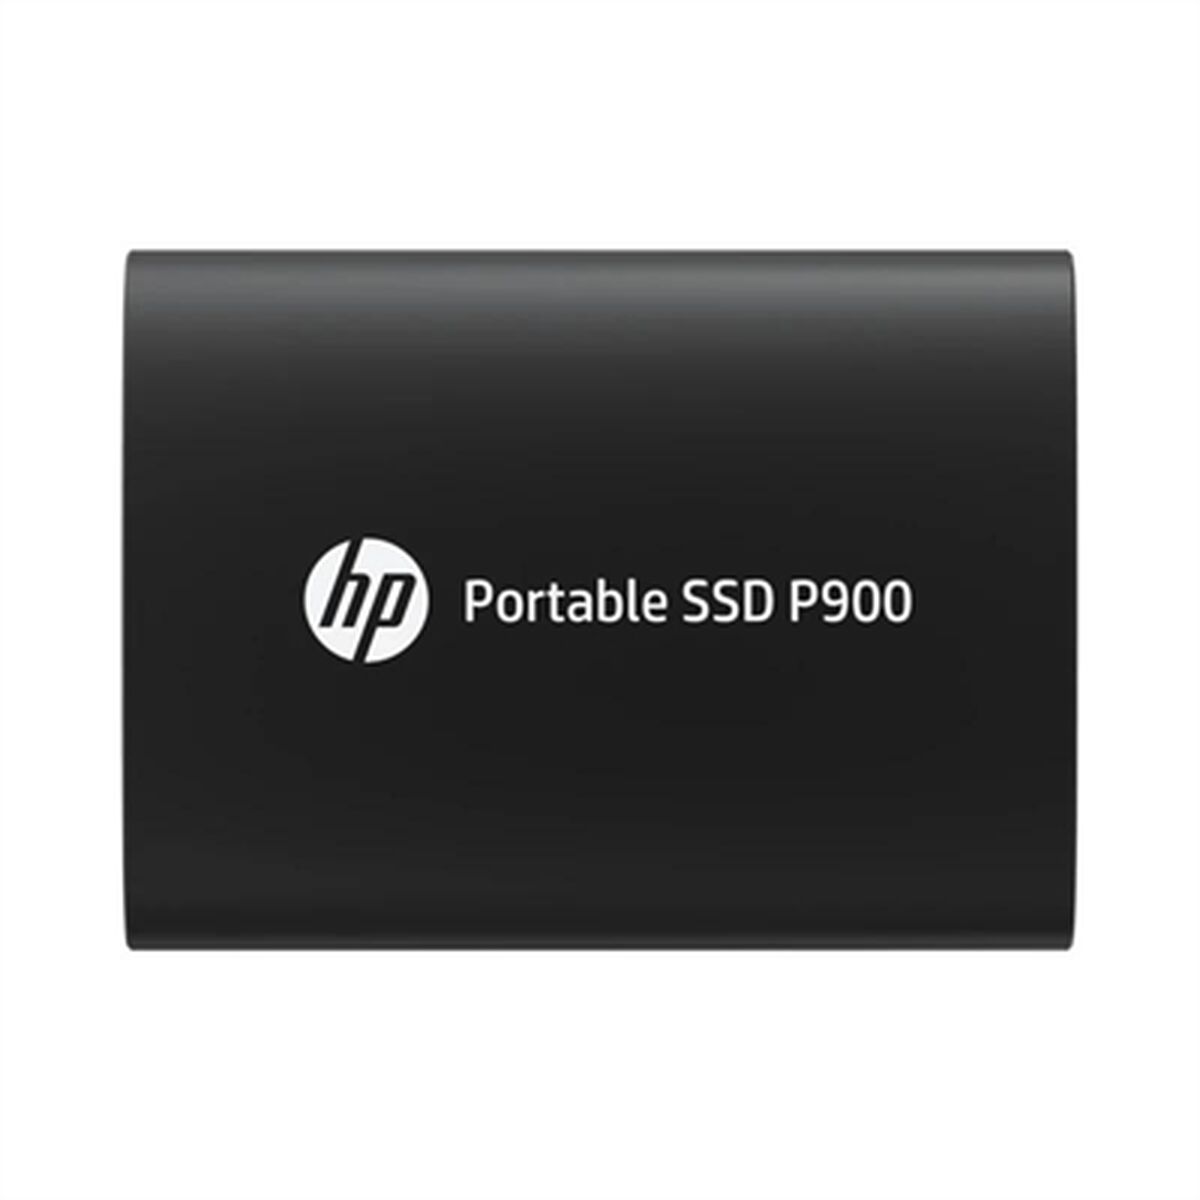 Ekstern harddisk HP P900 1 TB